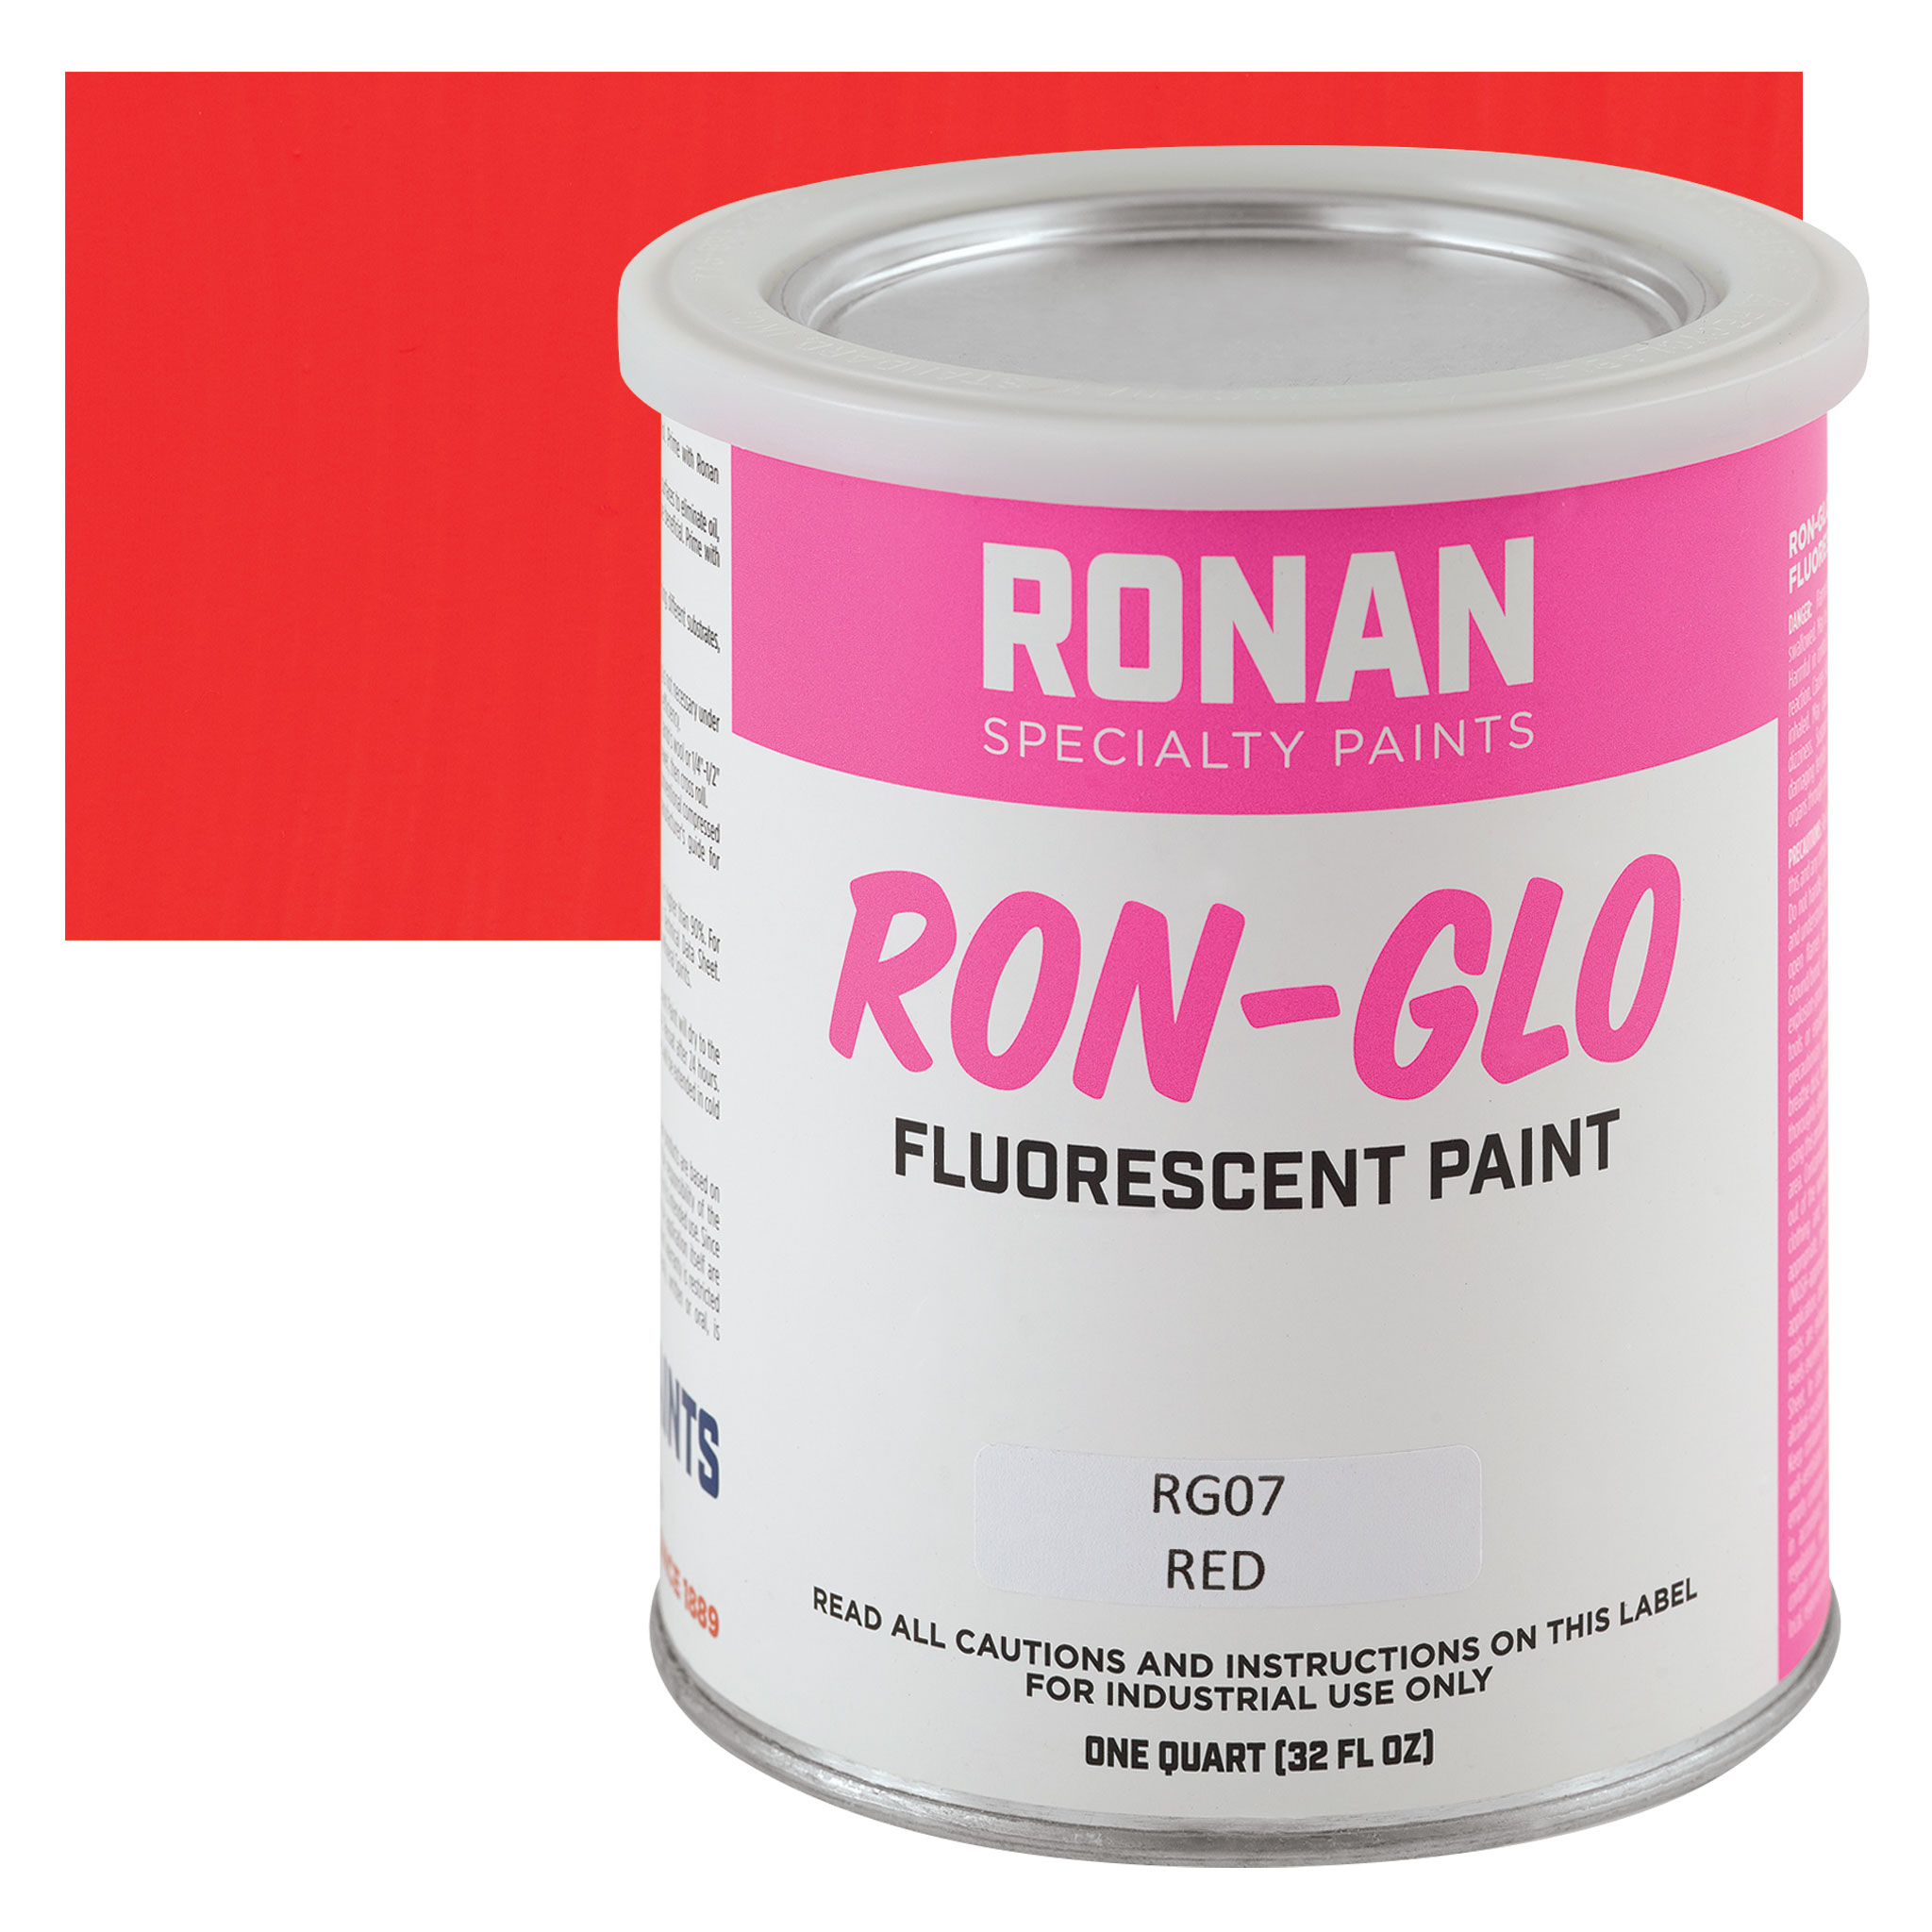 Ronan RON-GLO Fluorescent Paint - Red, Quart